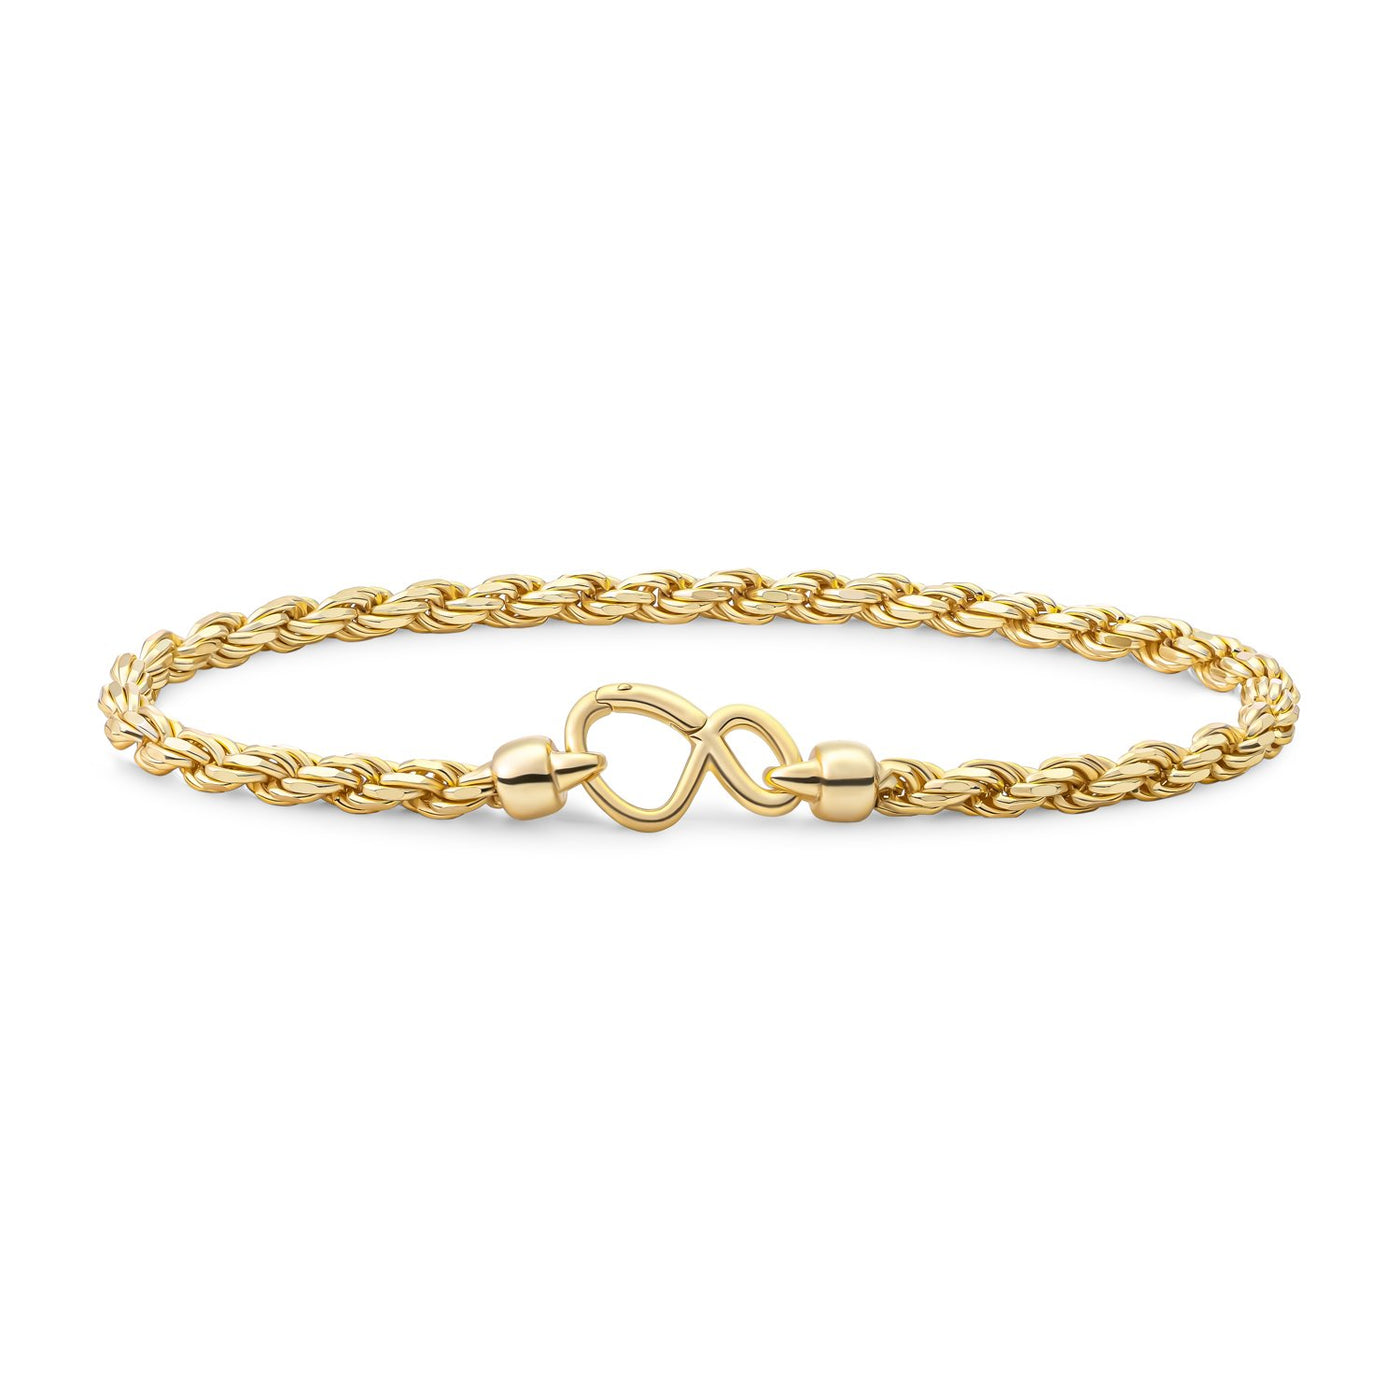 Rope chain bracelet Gold Plated | Sparklinks